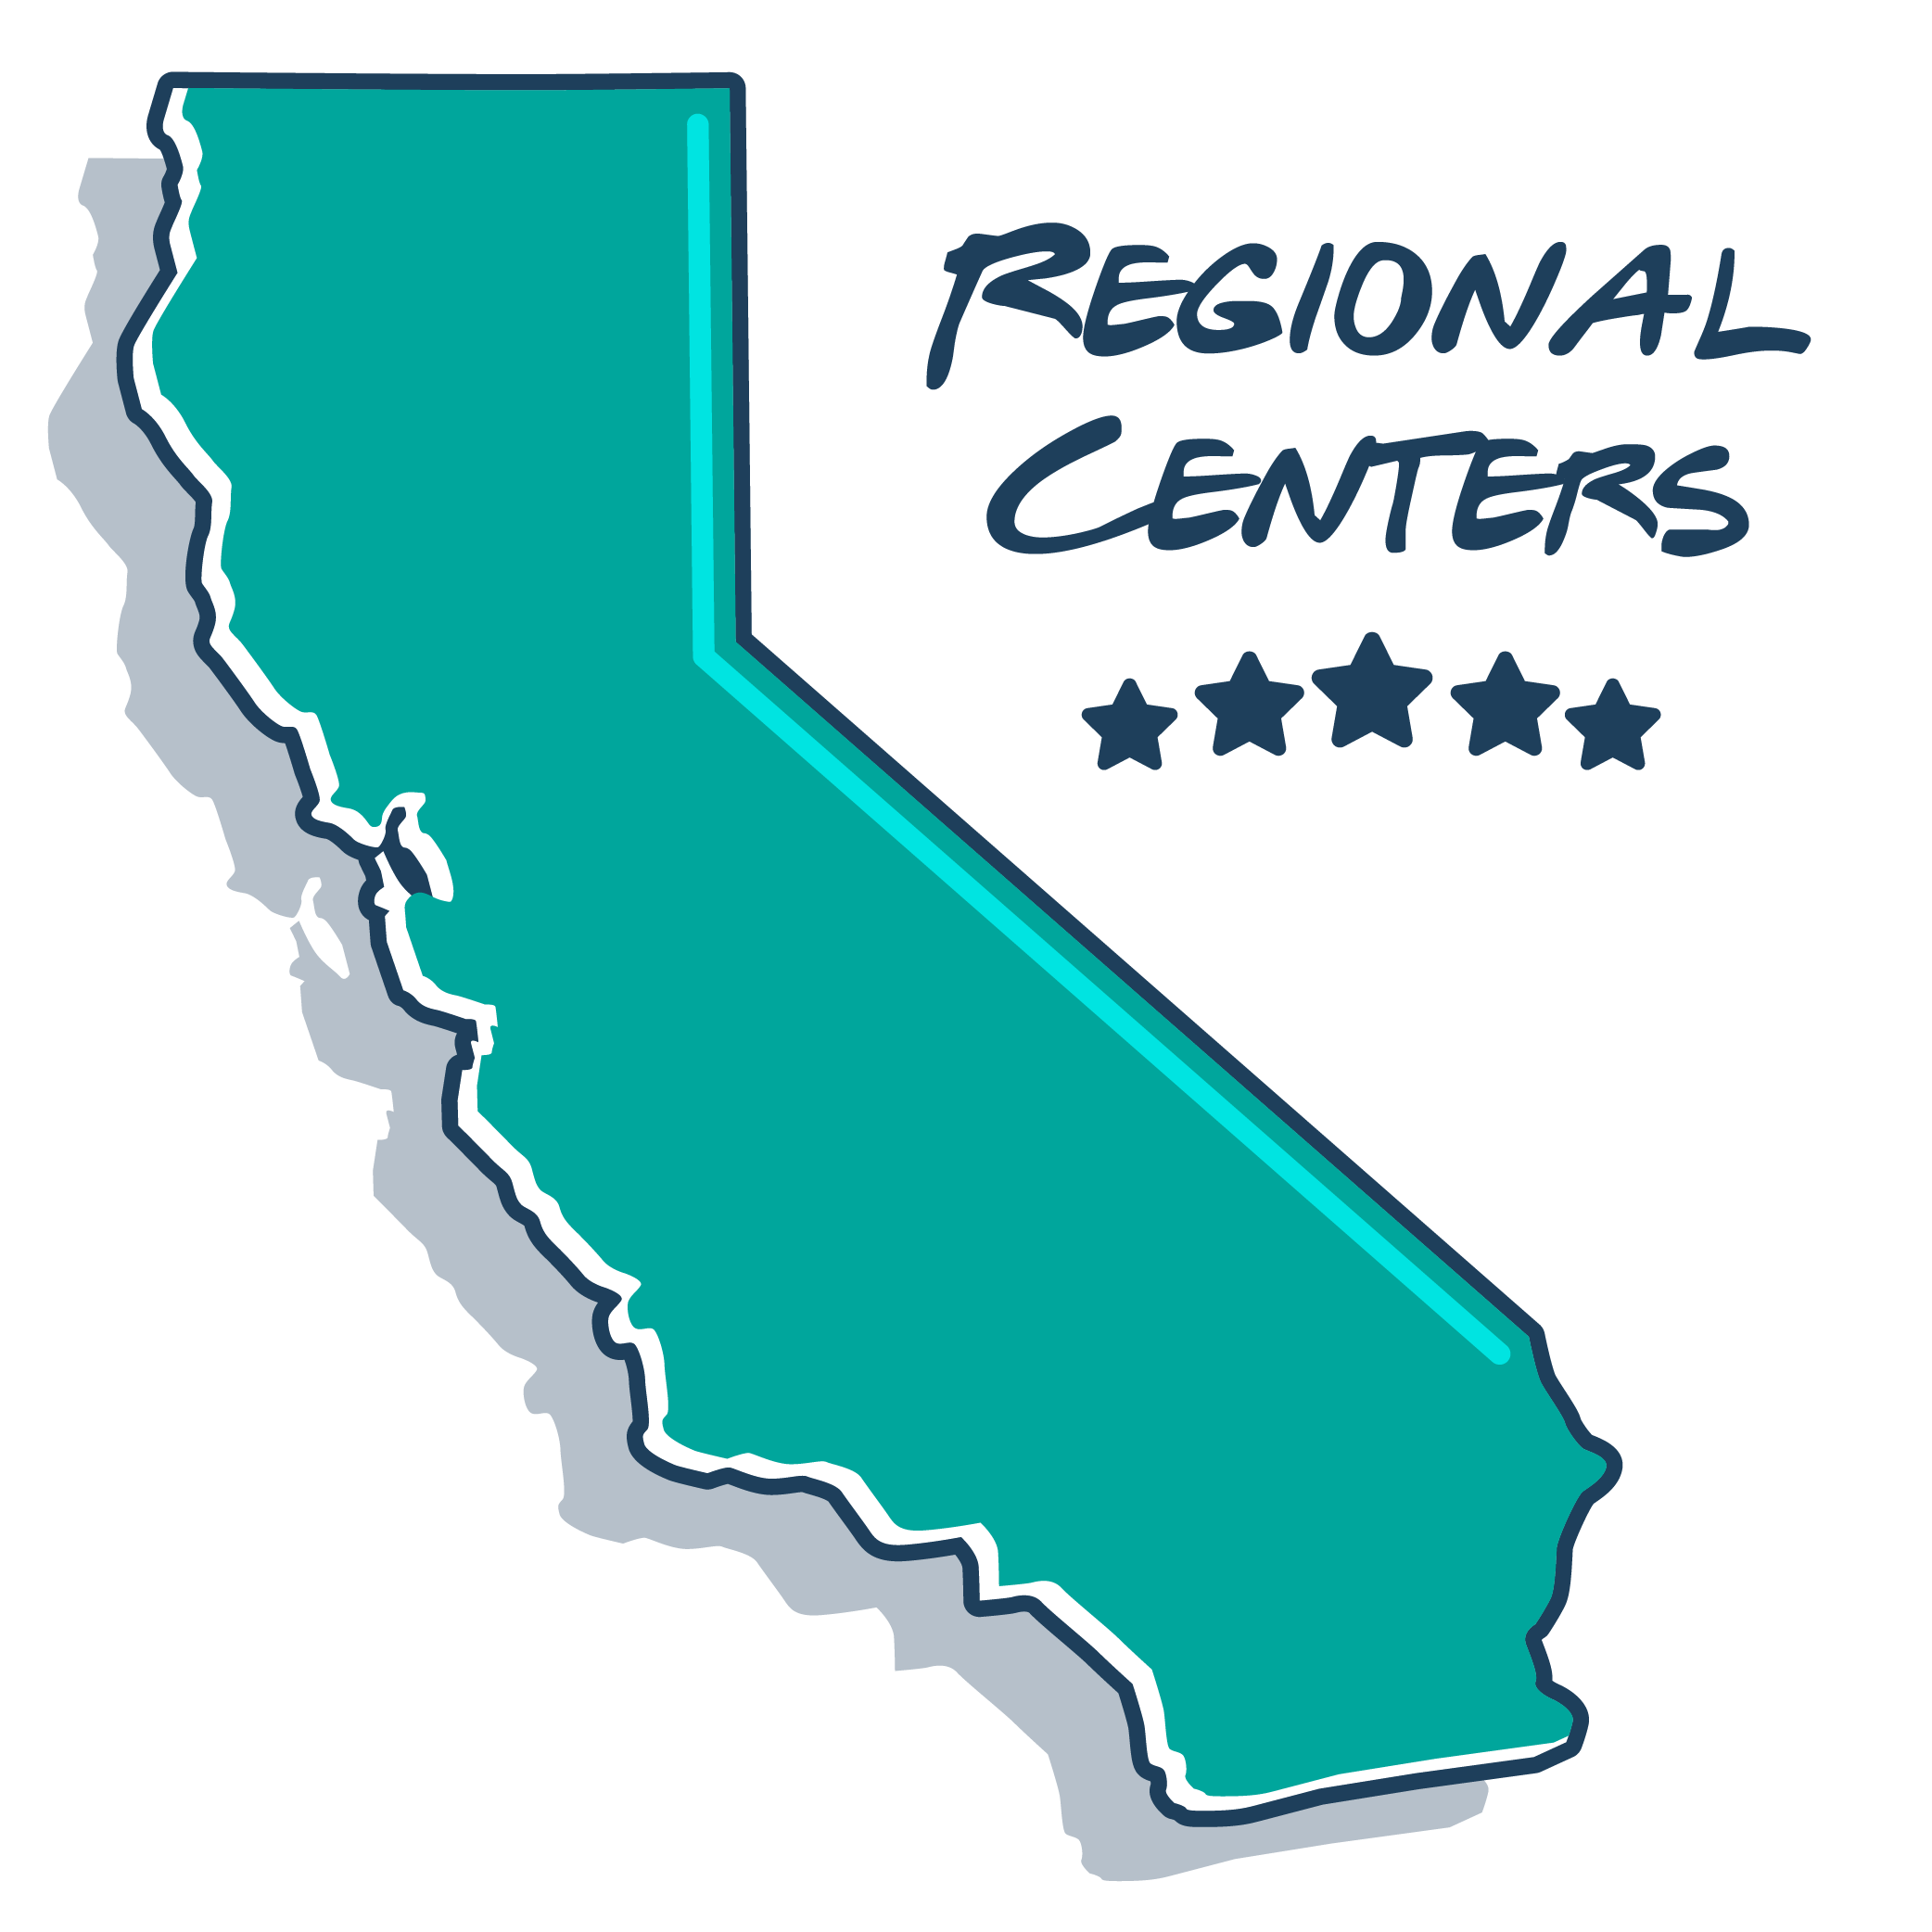 Regional Centers